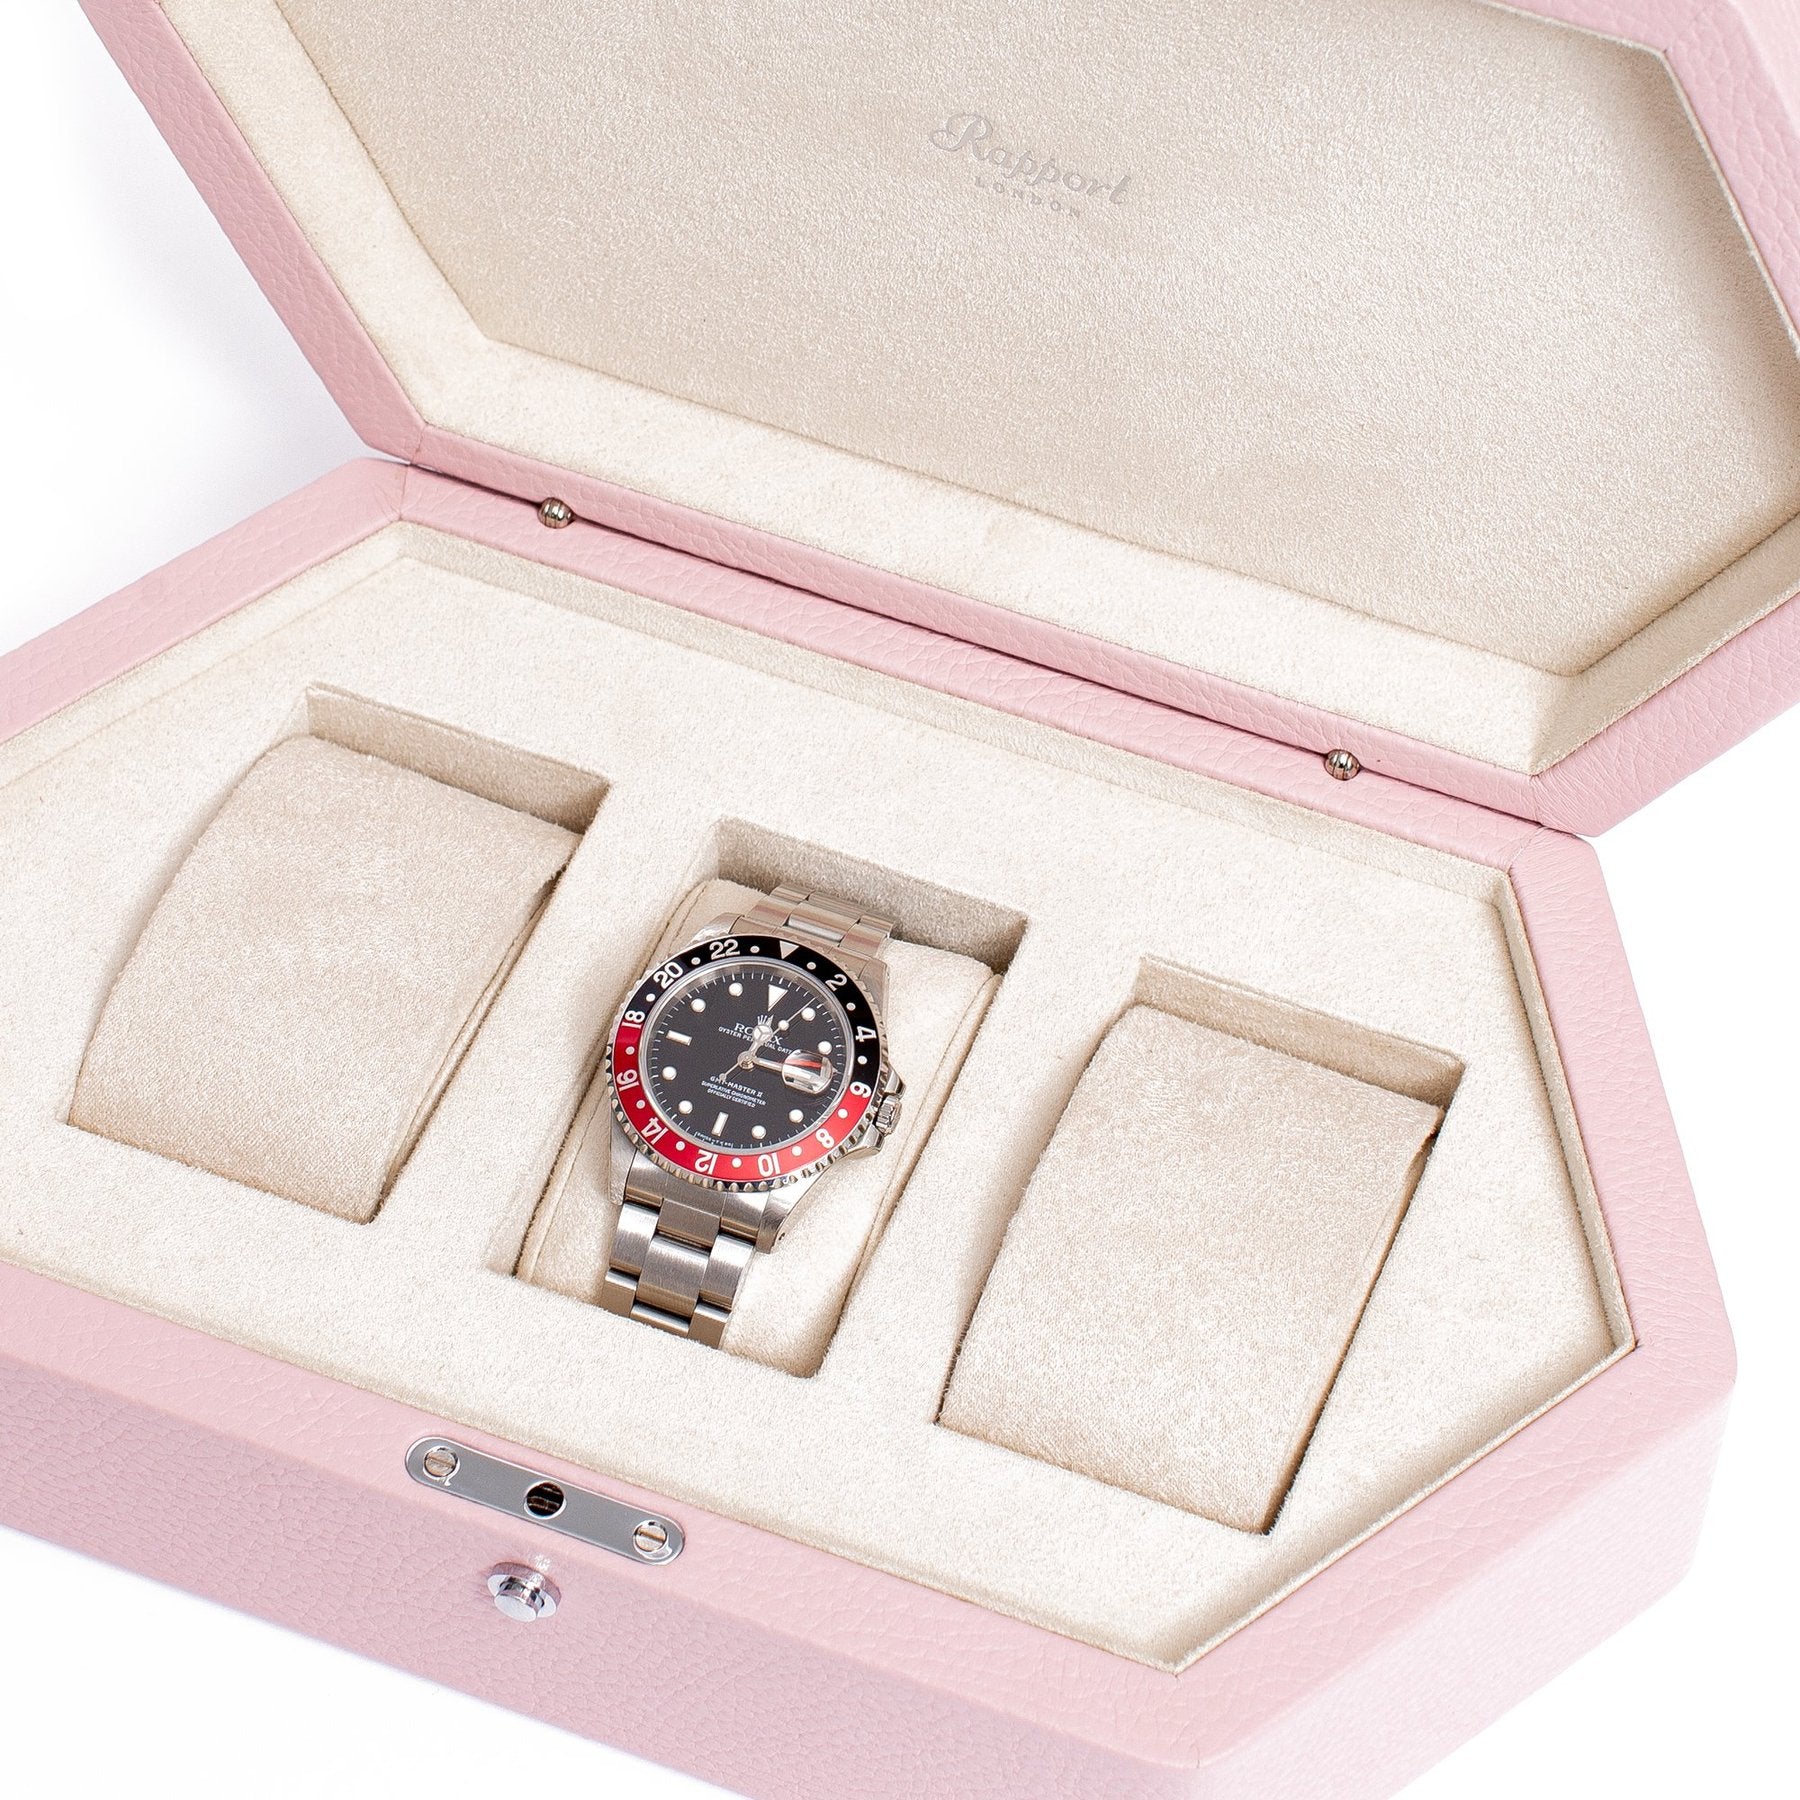 Rapport Portobello Watch Box in Pink Leather TA40 - Watchwindersplus